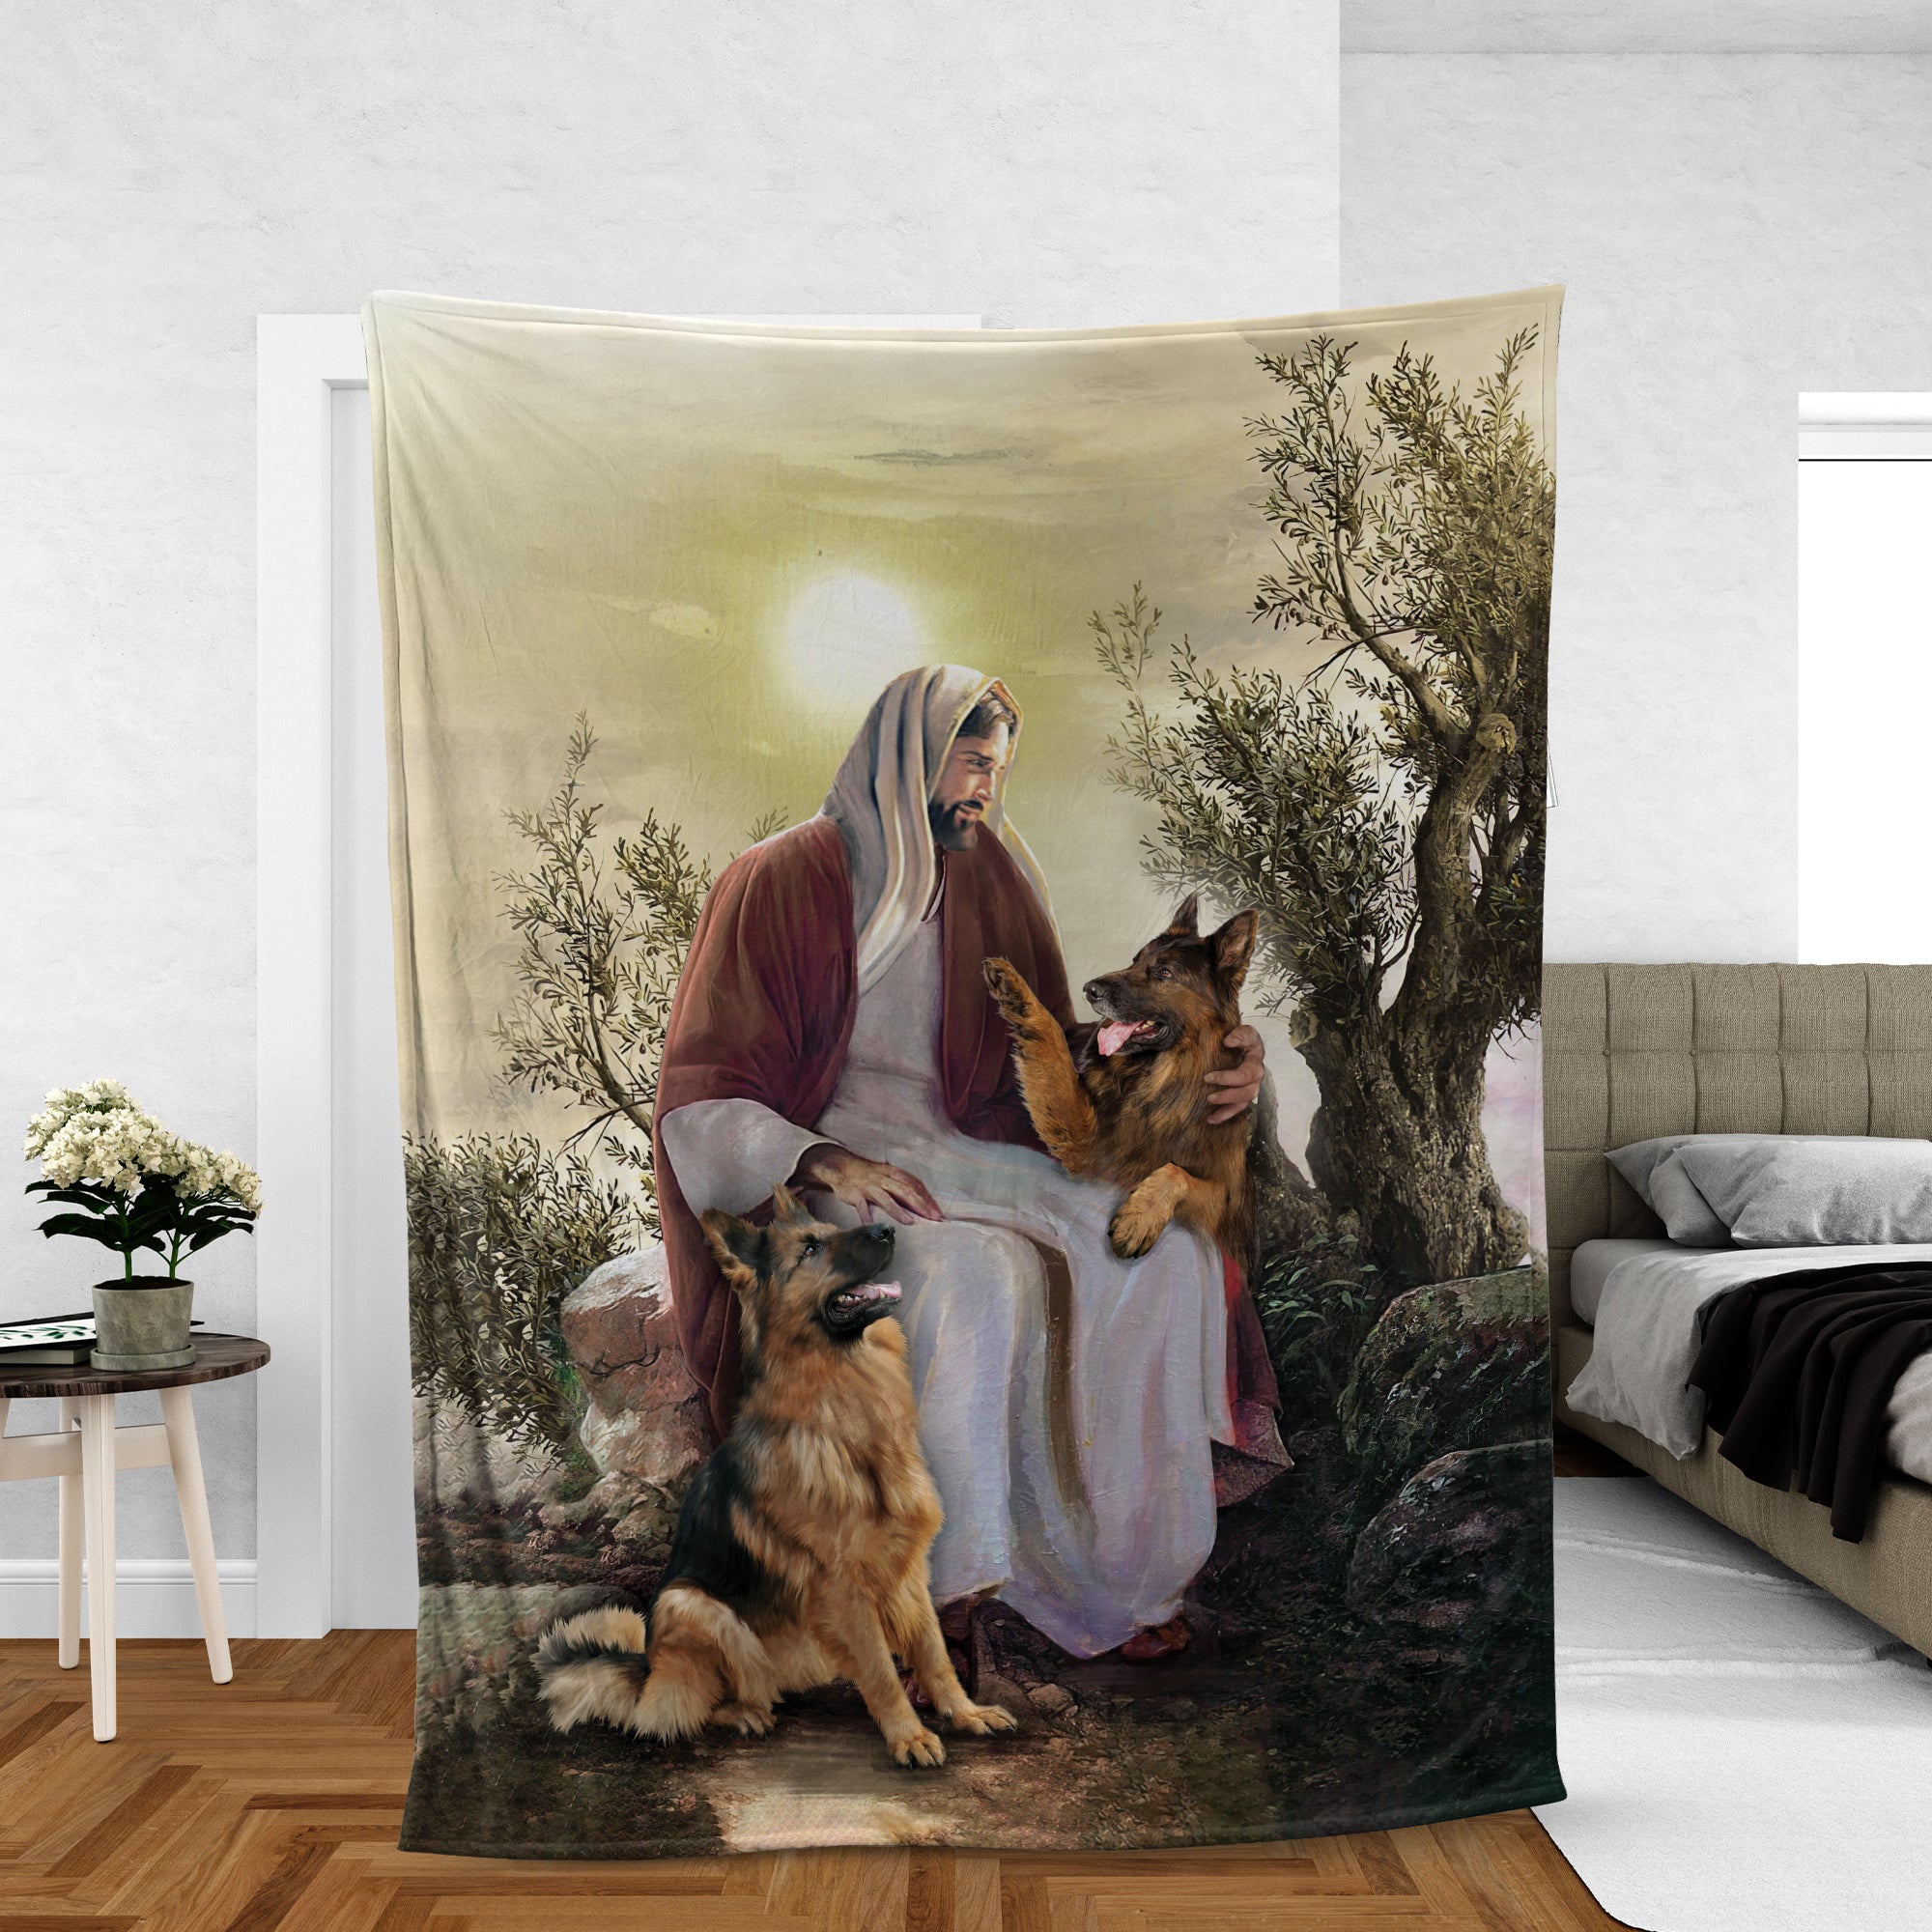 Christian Throw Blanket, German Shepherd Blanket, Faith Blanket, Inspirational Gift - German Shepherd, Under The Tree With Jesus